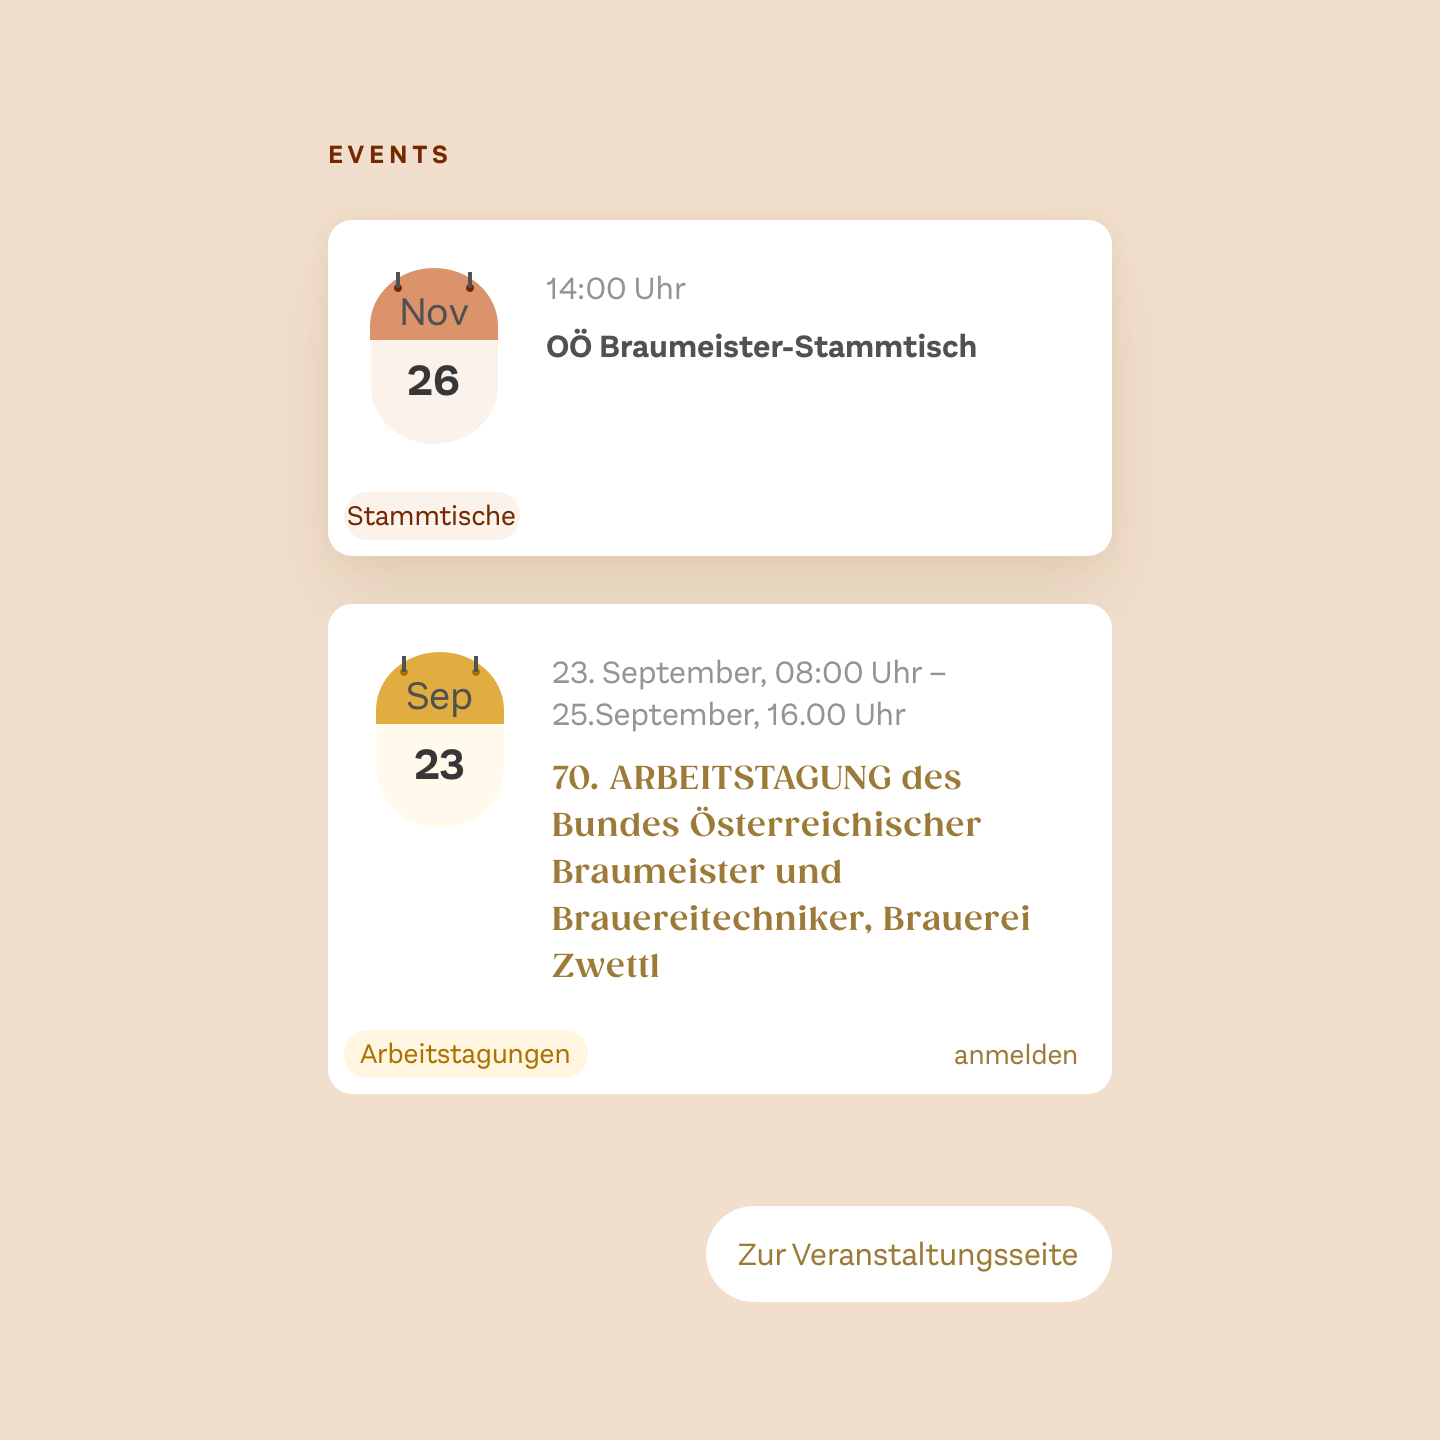 Design of event teasers on braumeisterbund.at